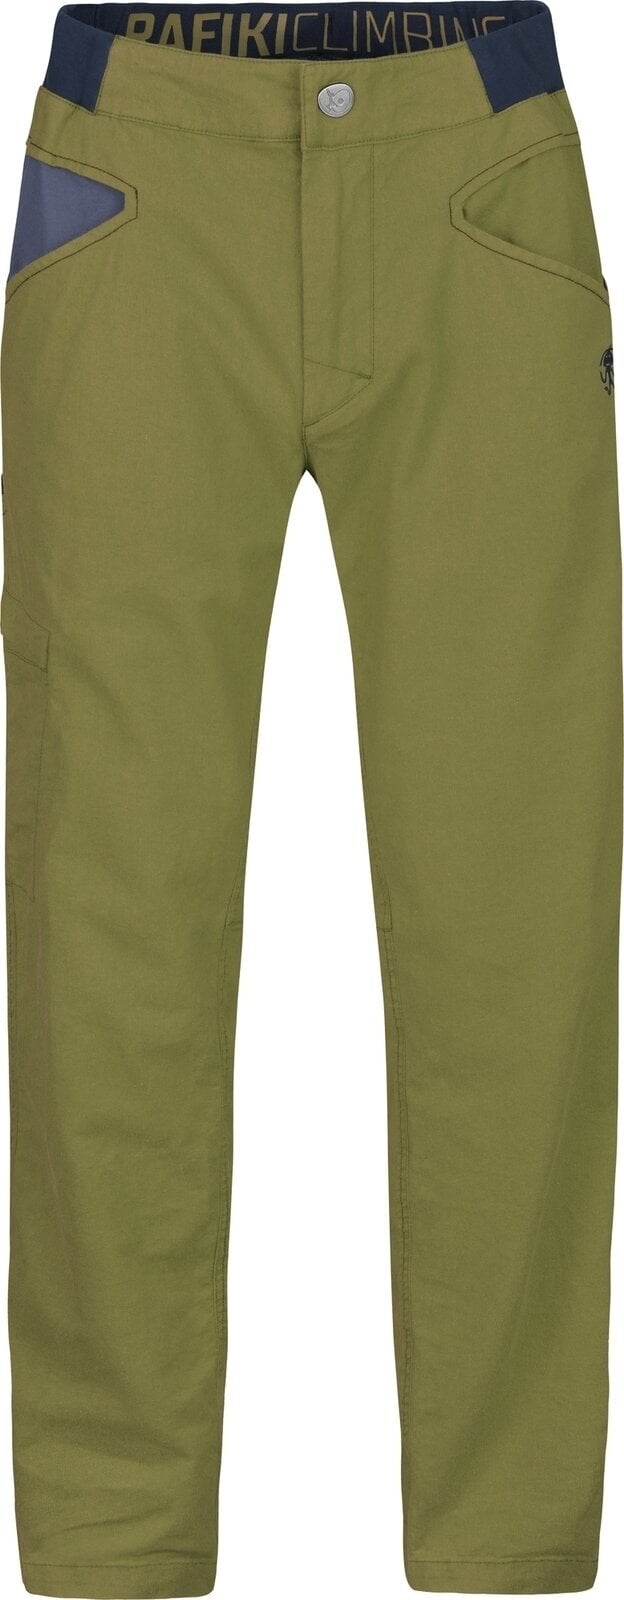 Outdoor Pants Rafiki Grip Man Pants Avocado M Outdoor Pants